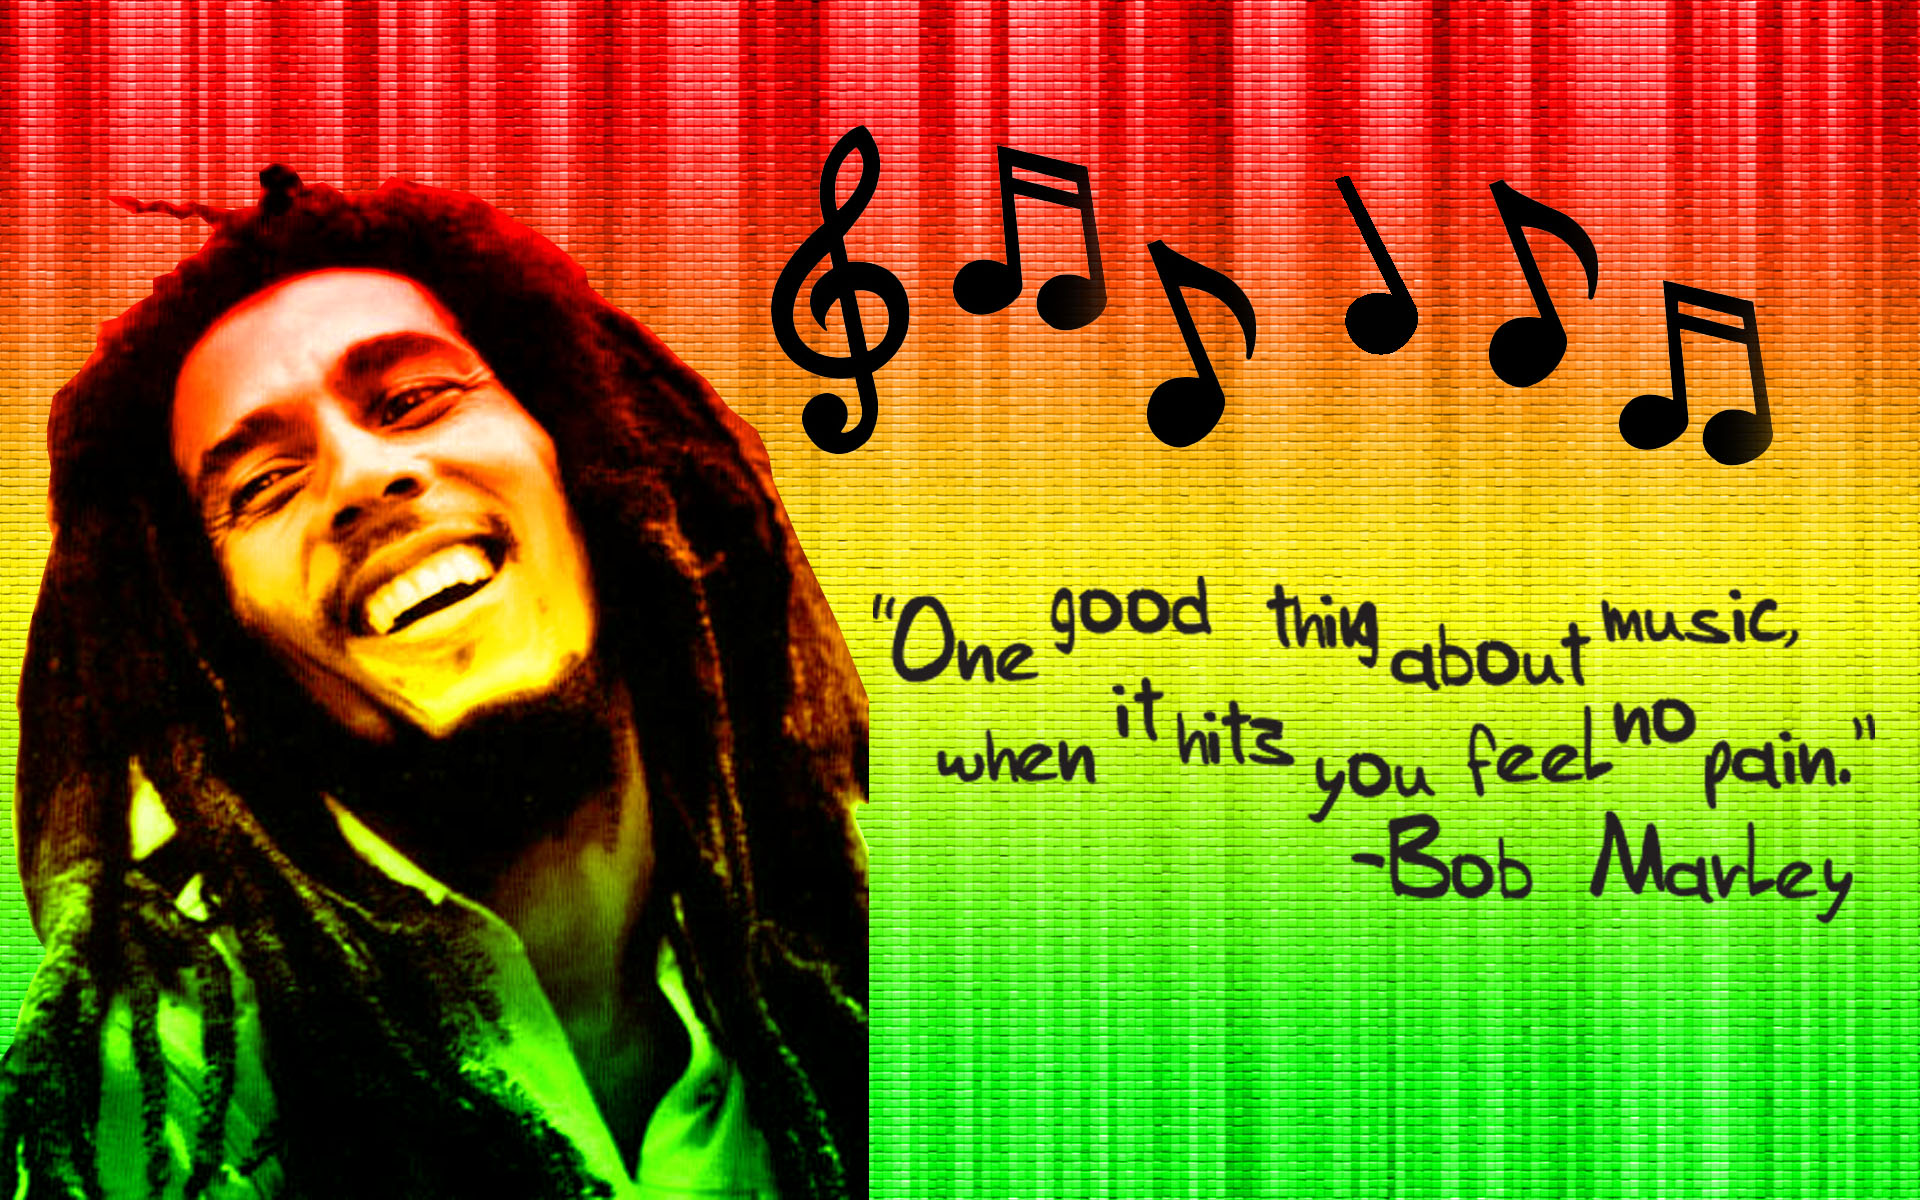 Bob Marley Quotes. QuotesGram